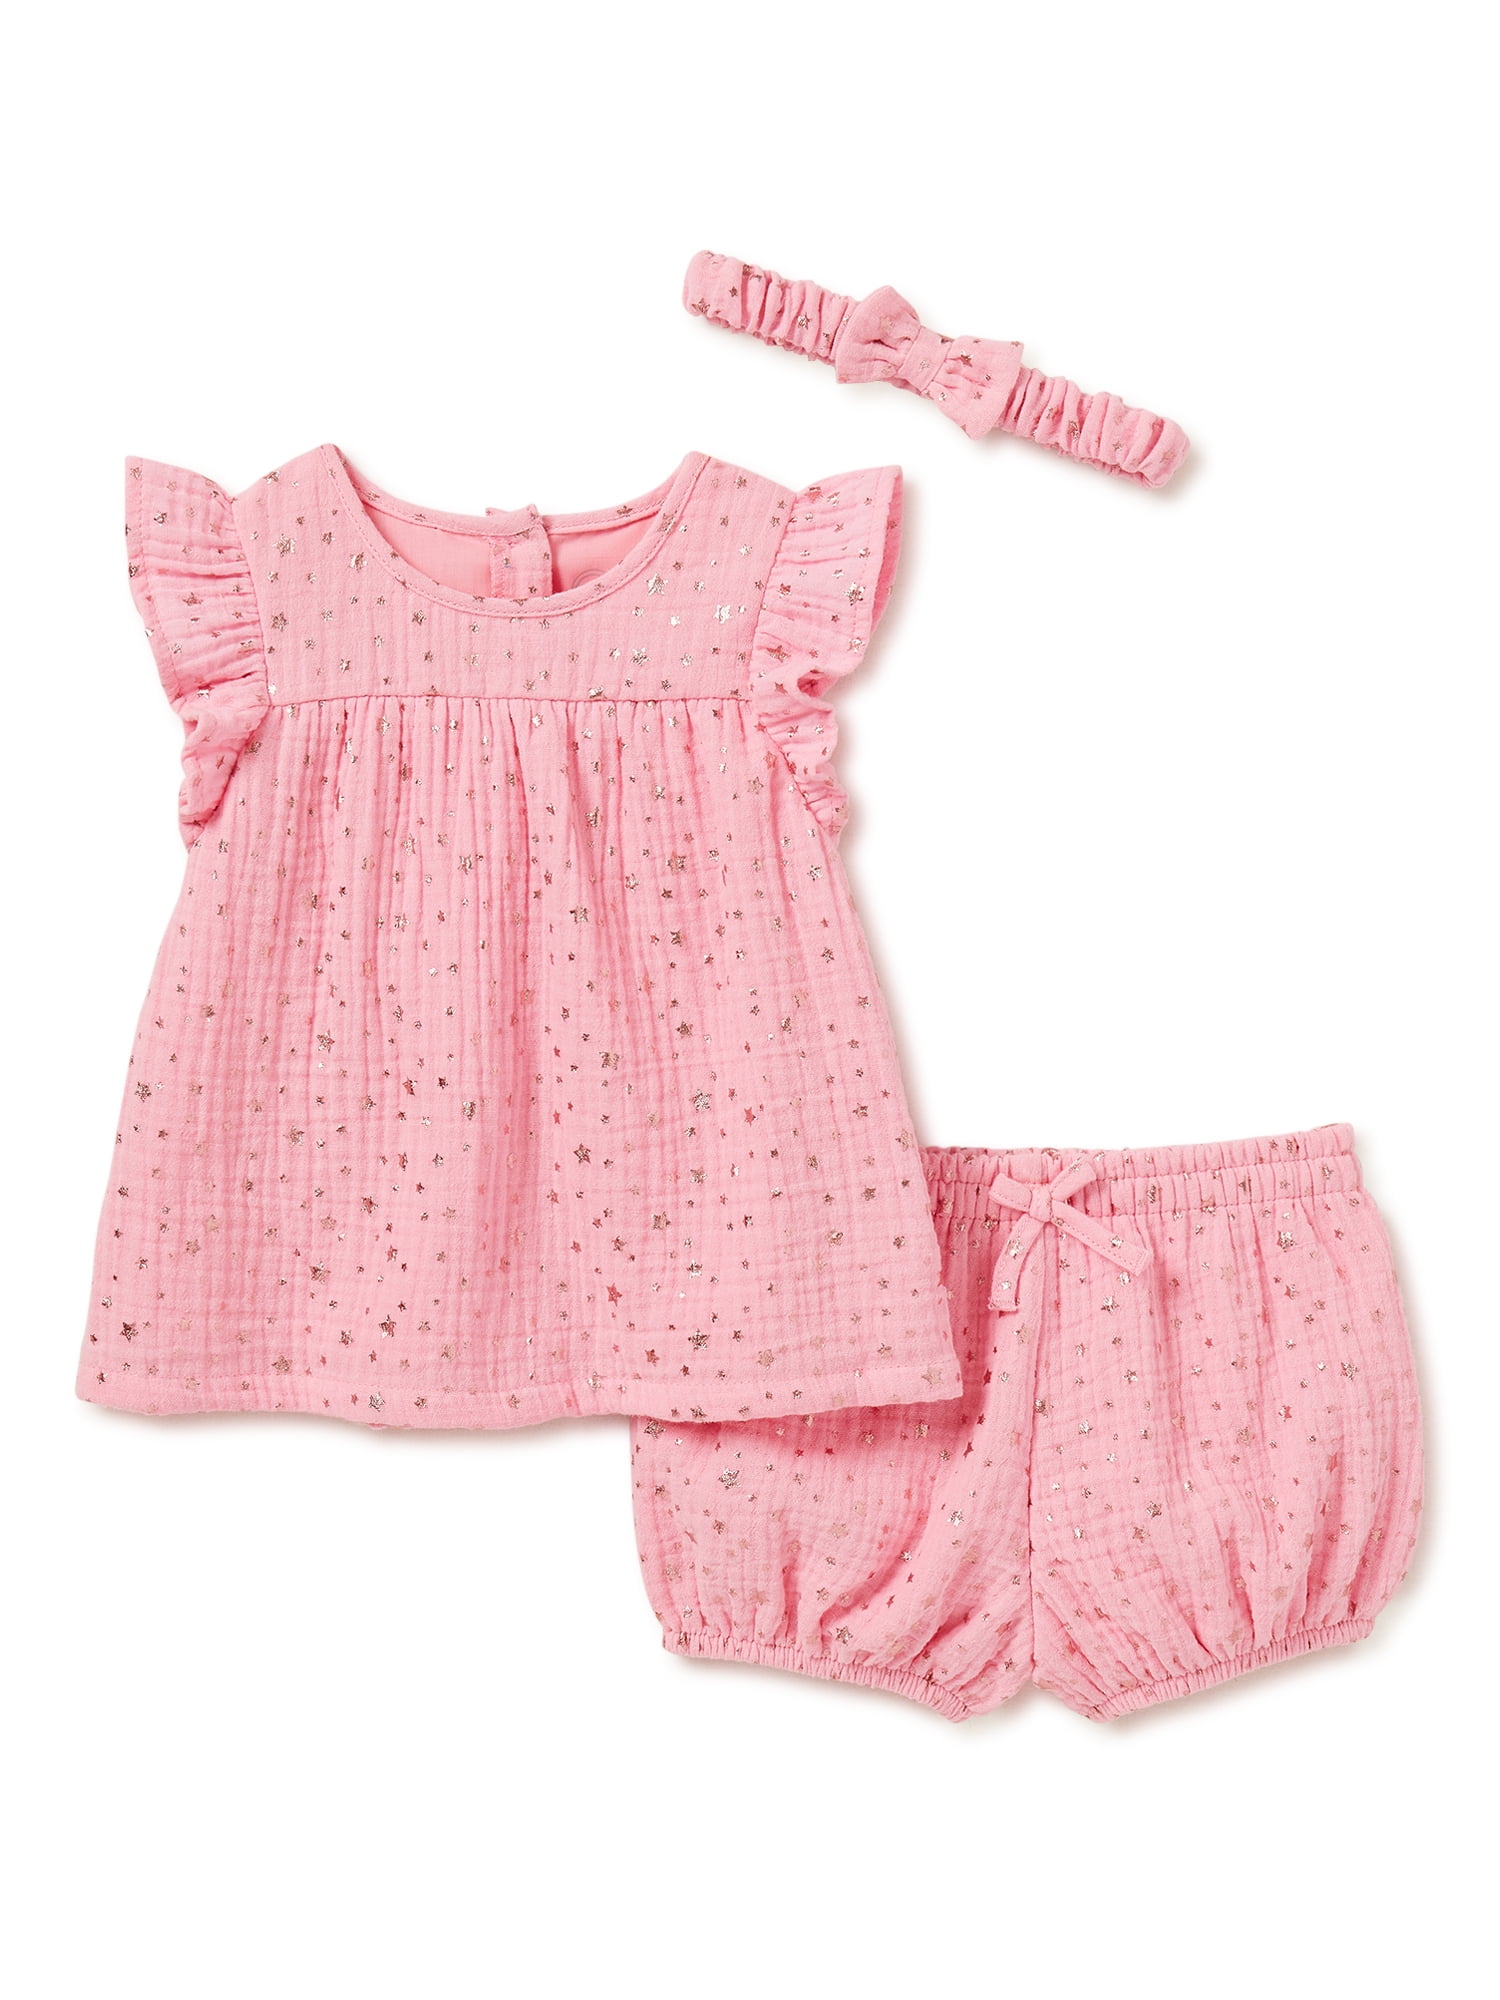 Toddler Newborn Girls Floral Clothes Set Ruffle Sleeveless Dress Tops Shirt Bloomer Short Pants Set with 2 Pockets